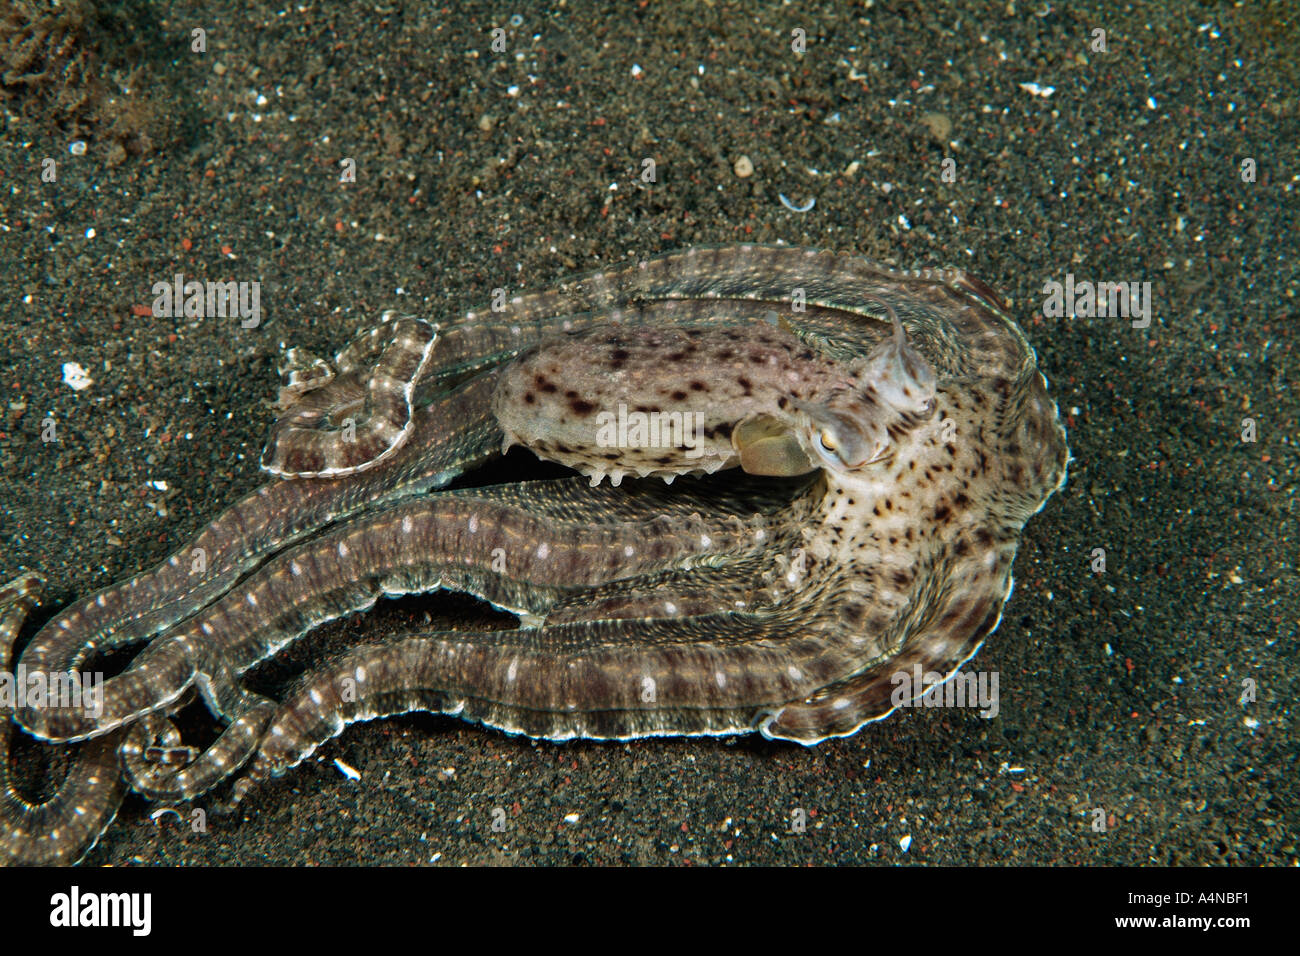 mimic octopus flatfish